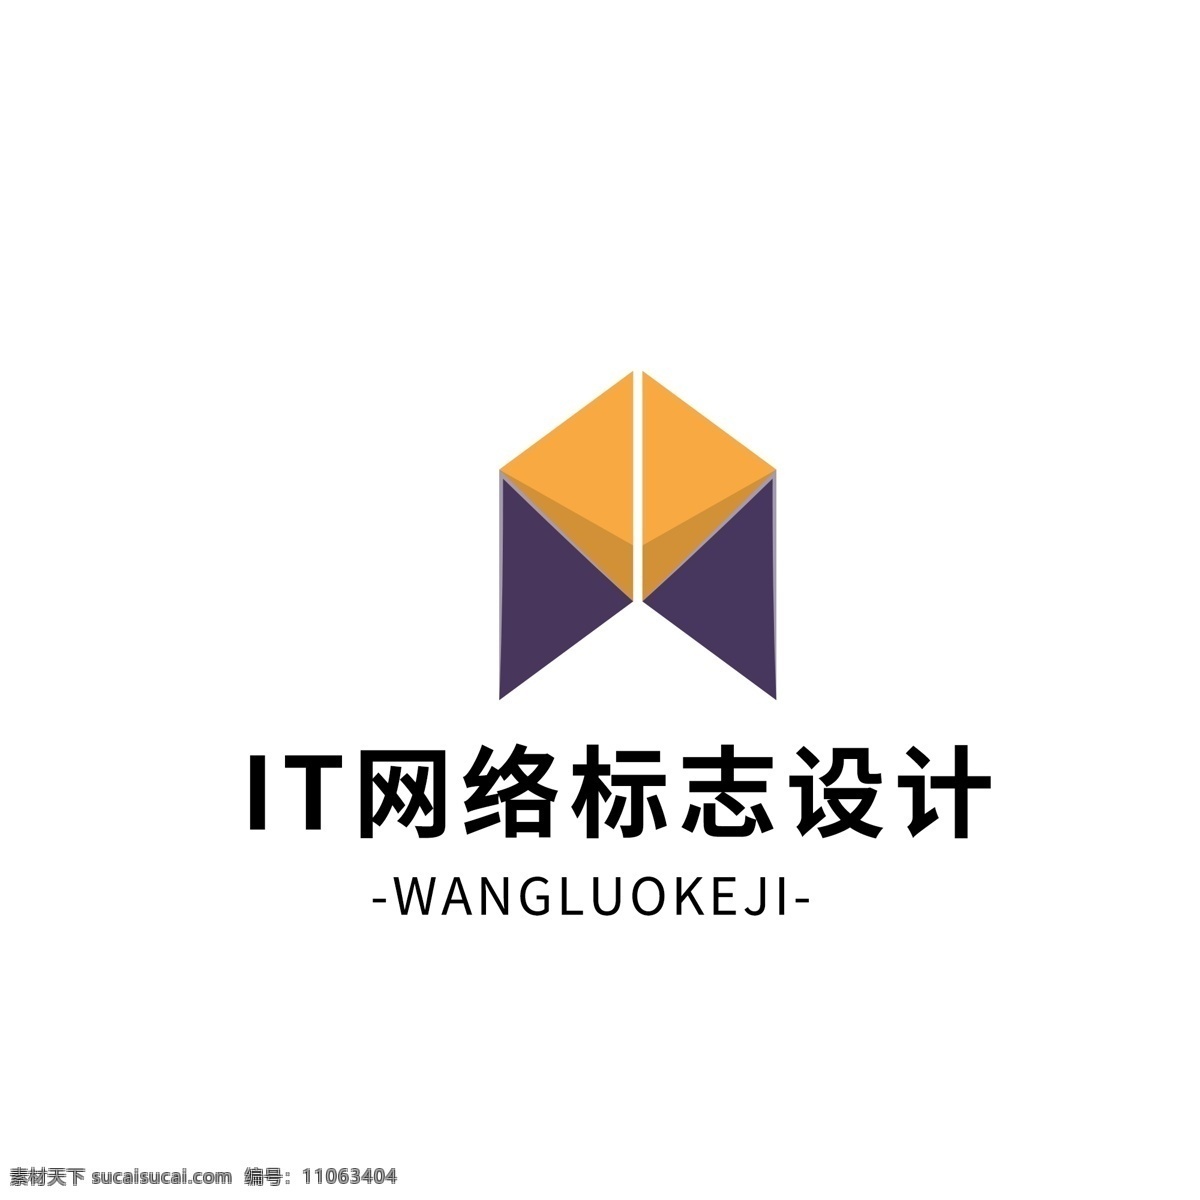 it 网络 标志设计 logo 简约 蓝色 黄色 紫色 图形 三角